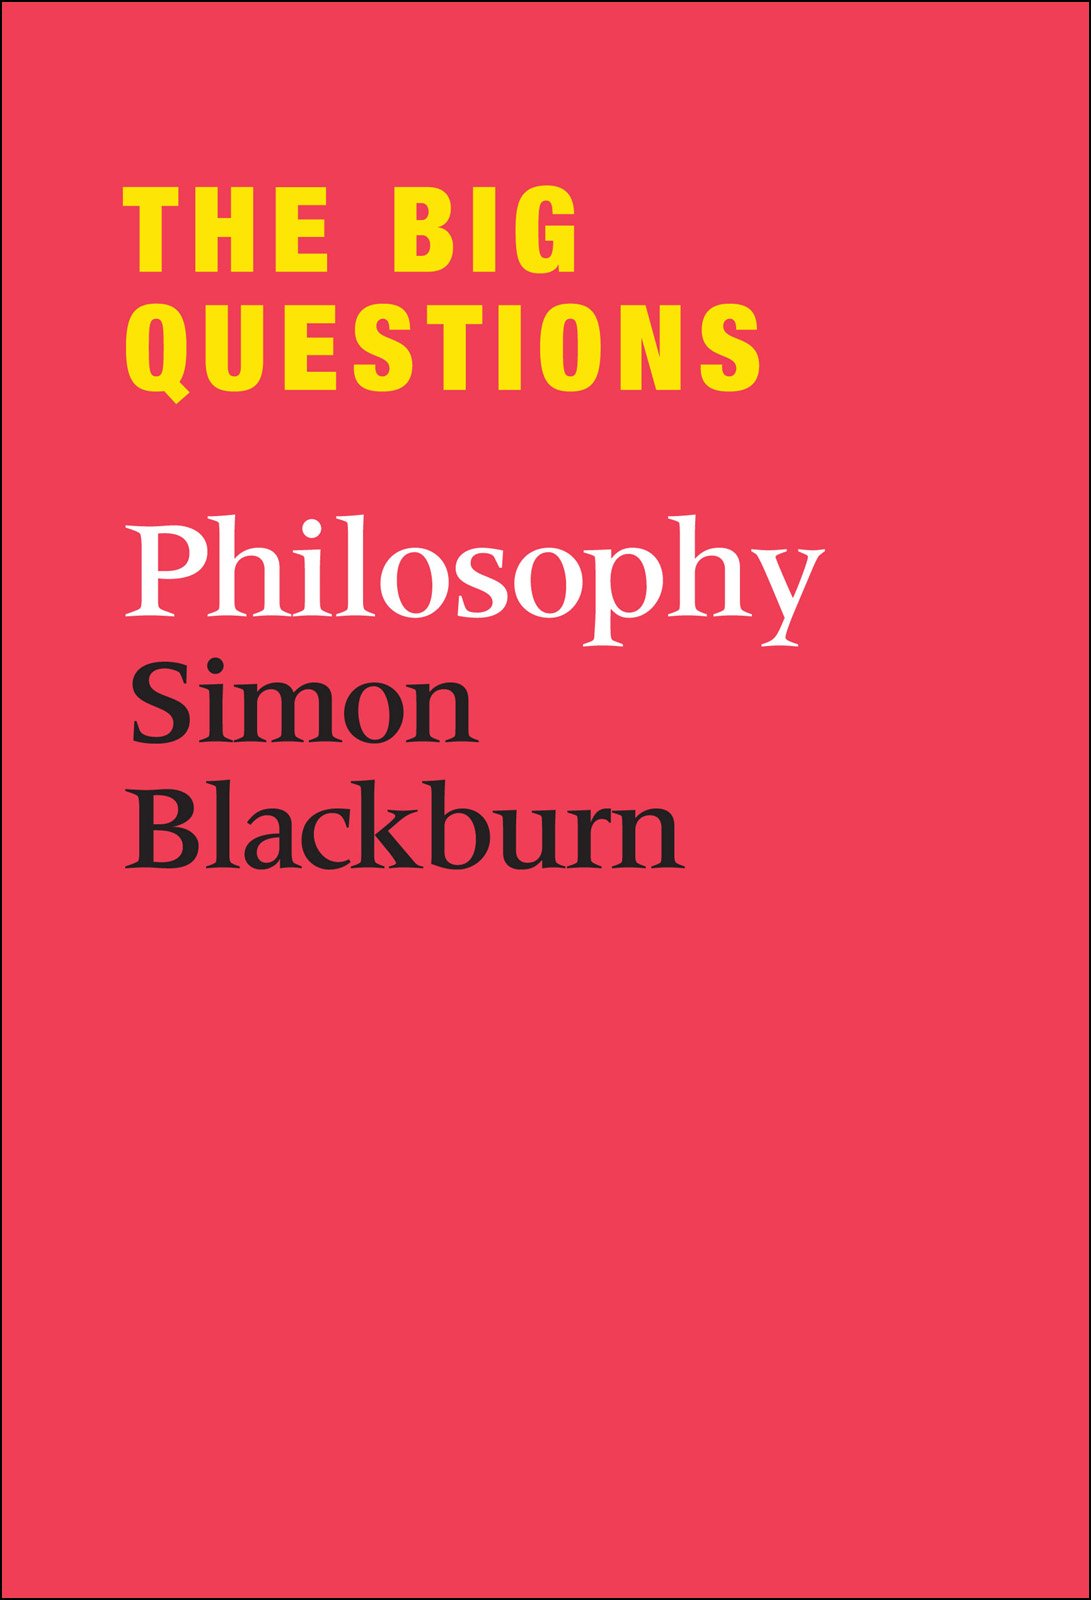 Philosophy as Fiction. Philosophy Bestseller книга. Philosophy questions.